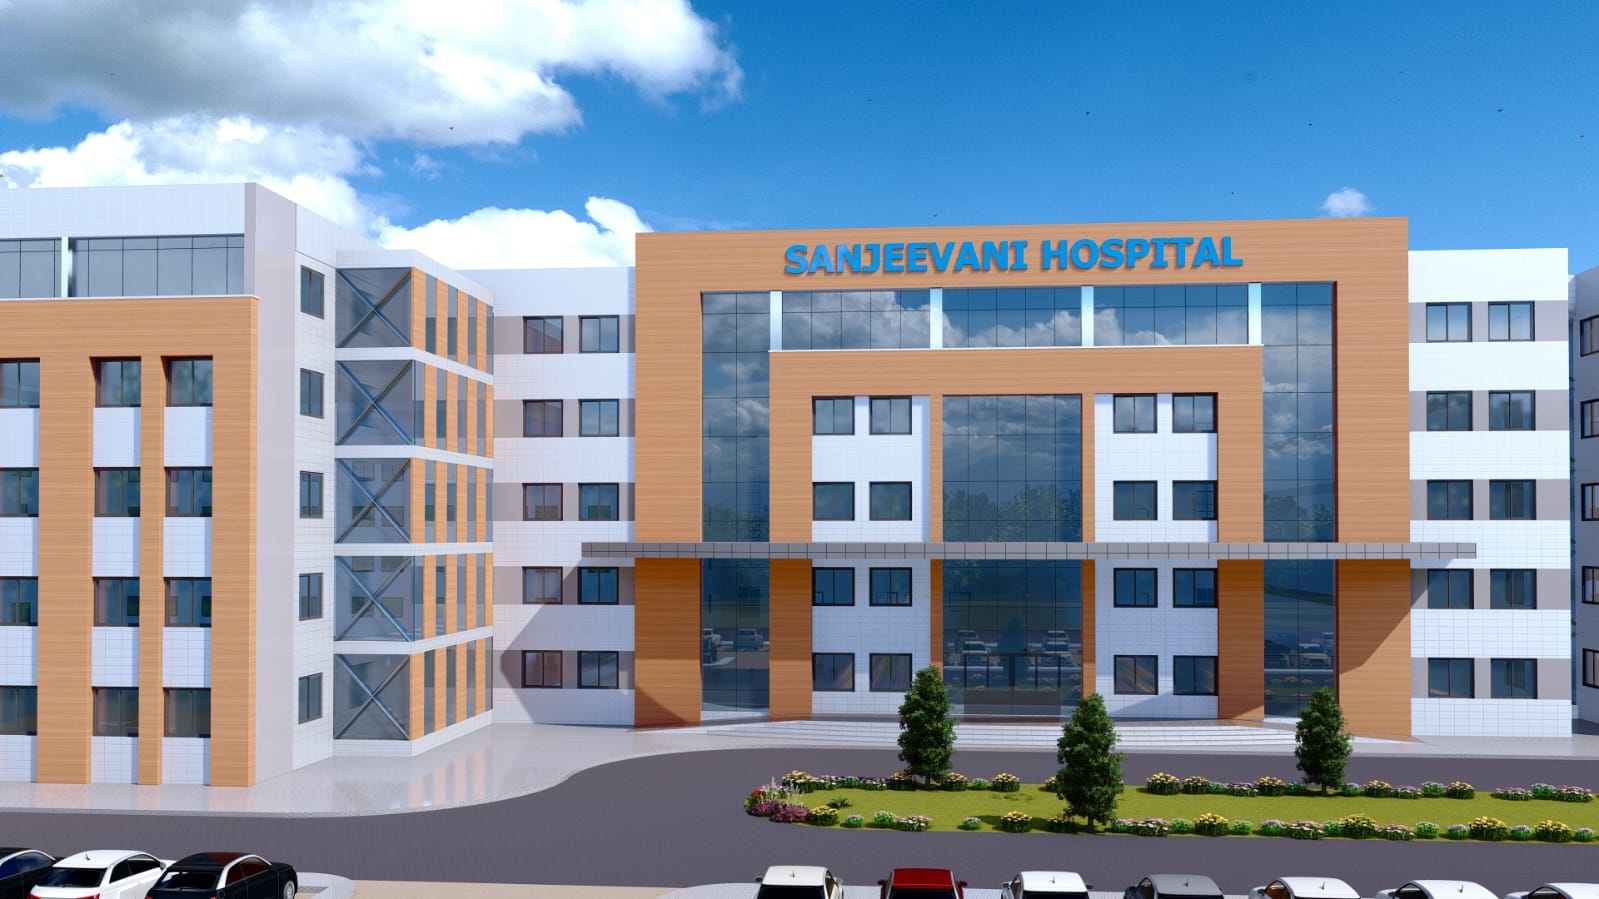 sanjeeveni hospital6.jpg